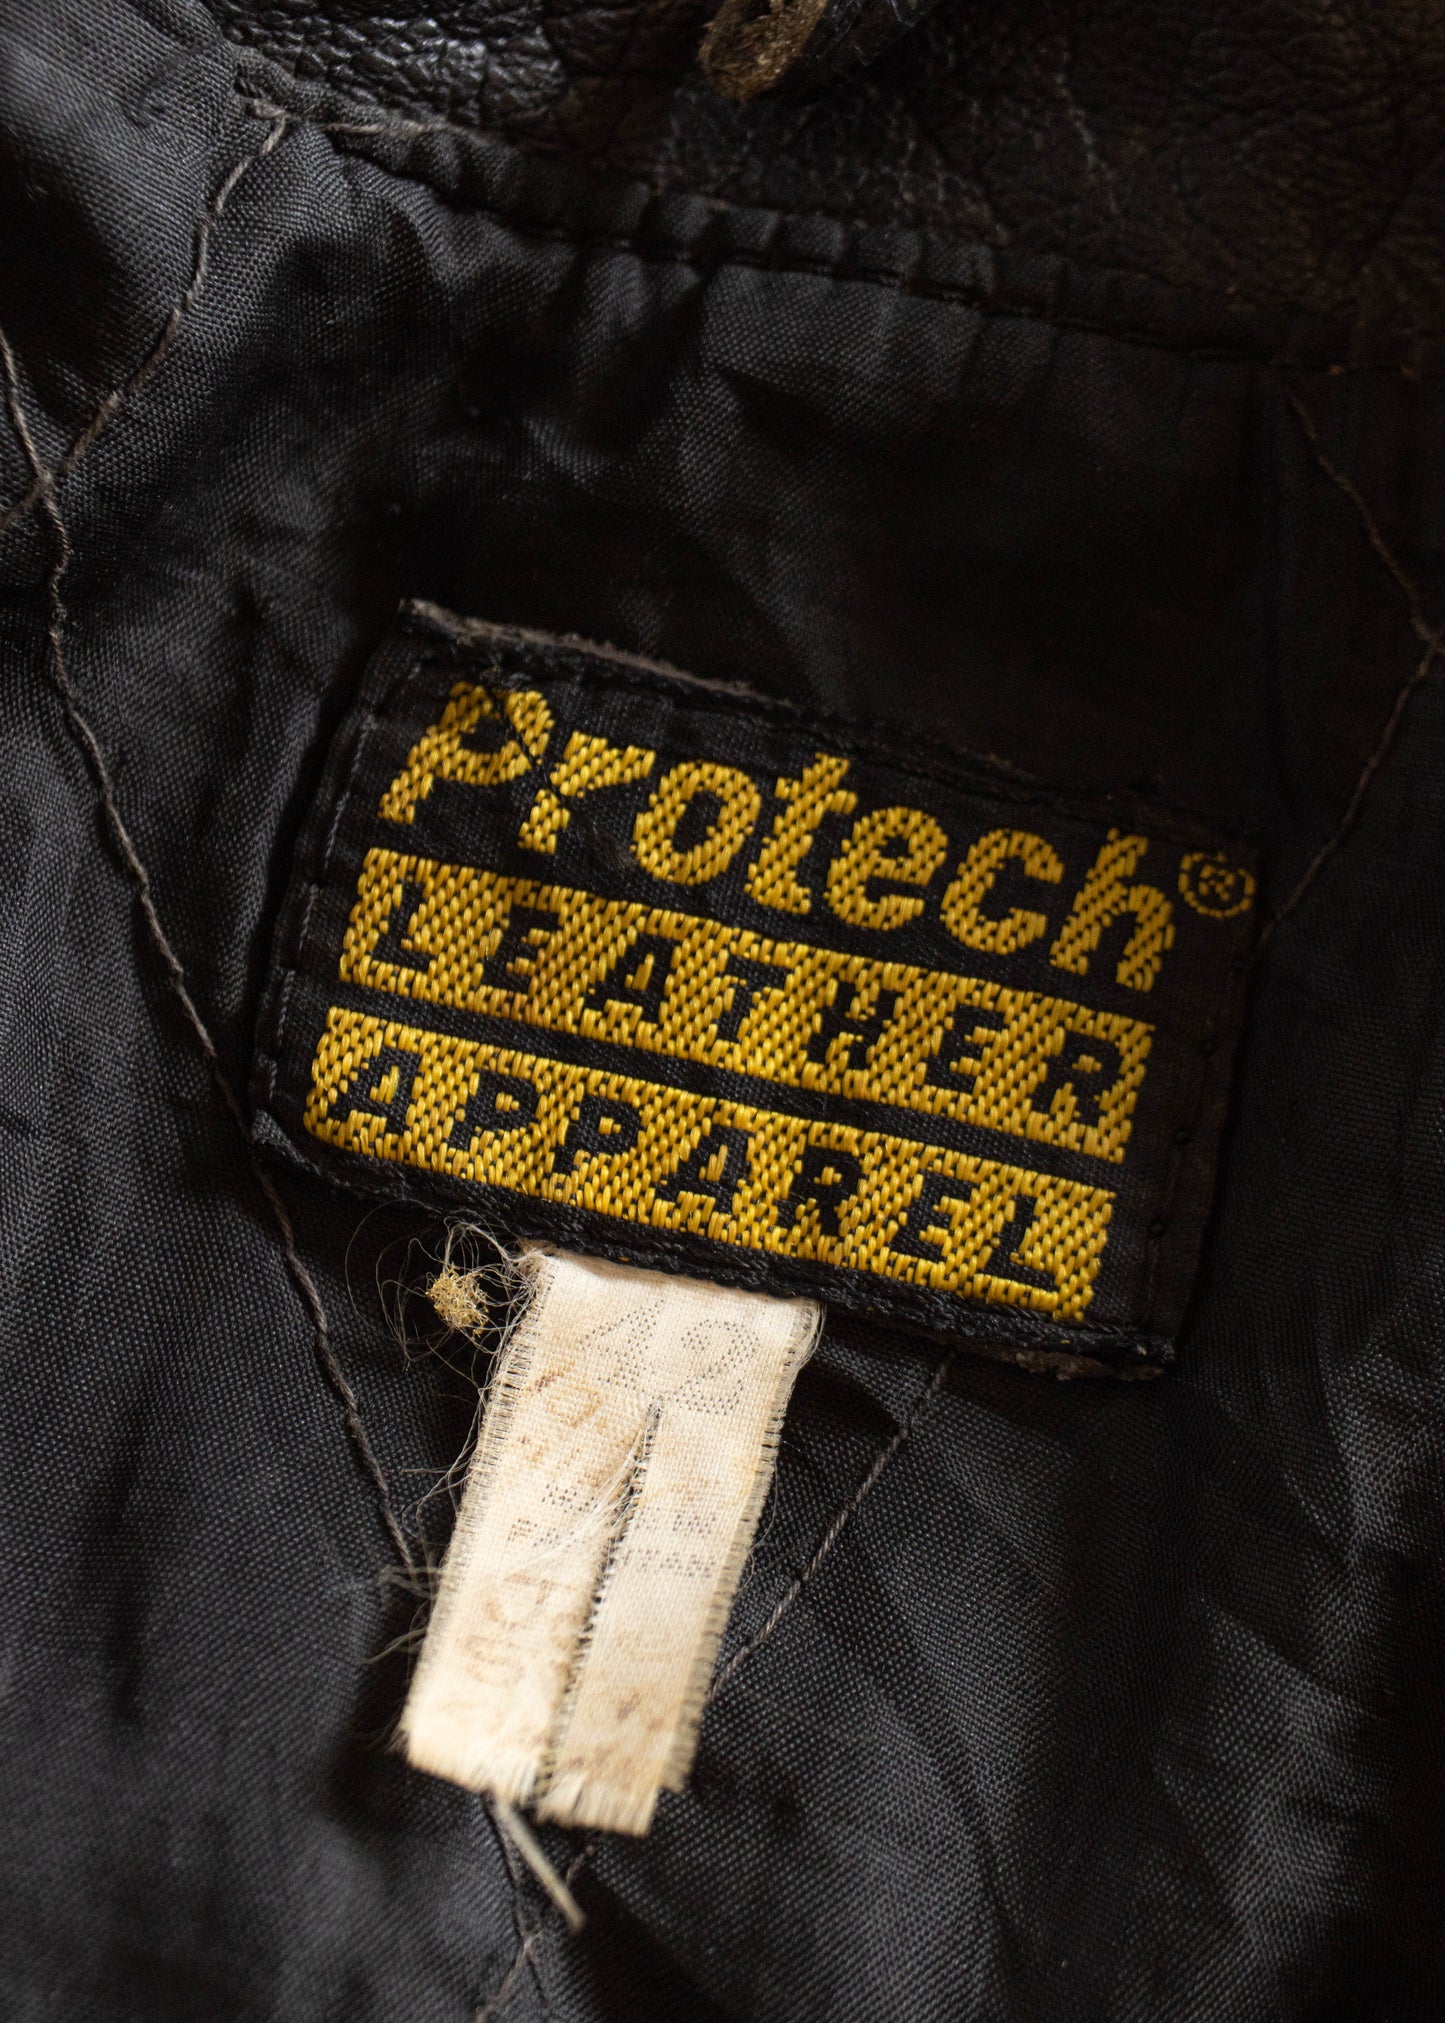 1980s Protech Leather Moto Jacket Size S/M